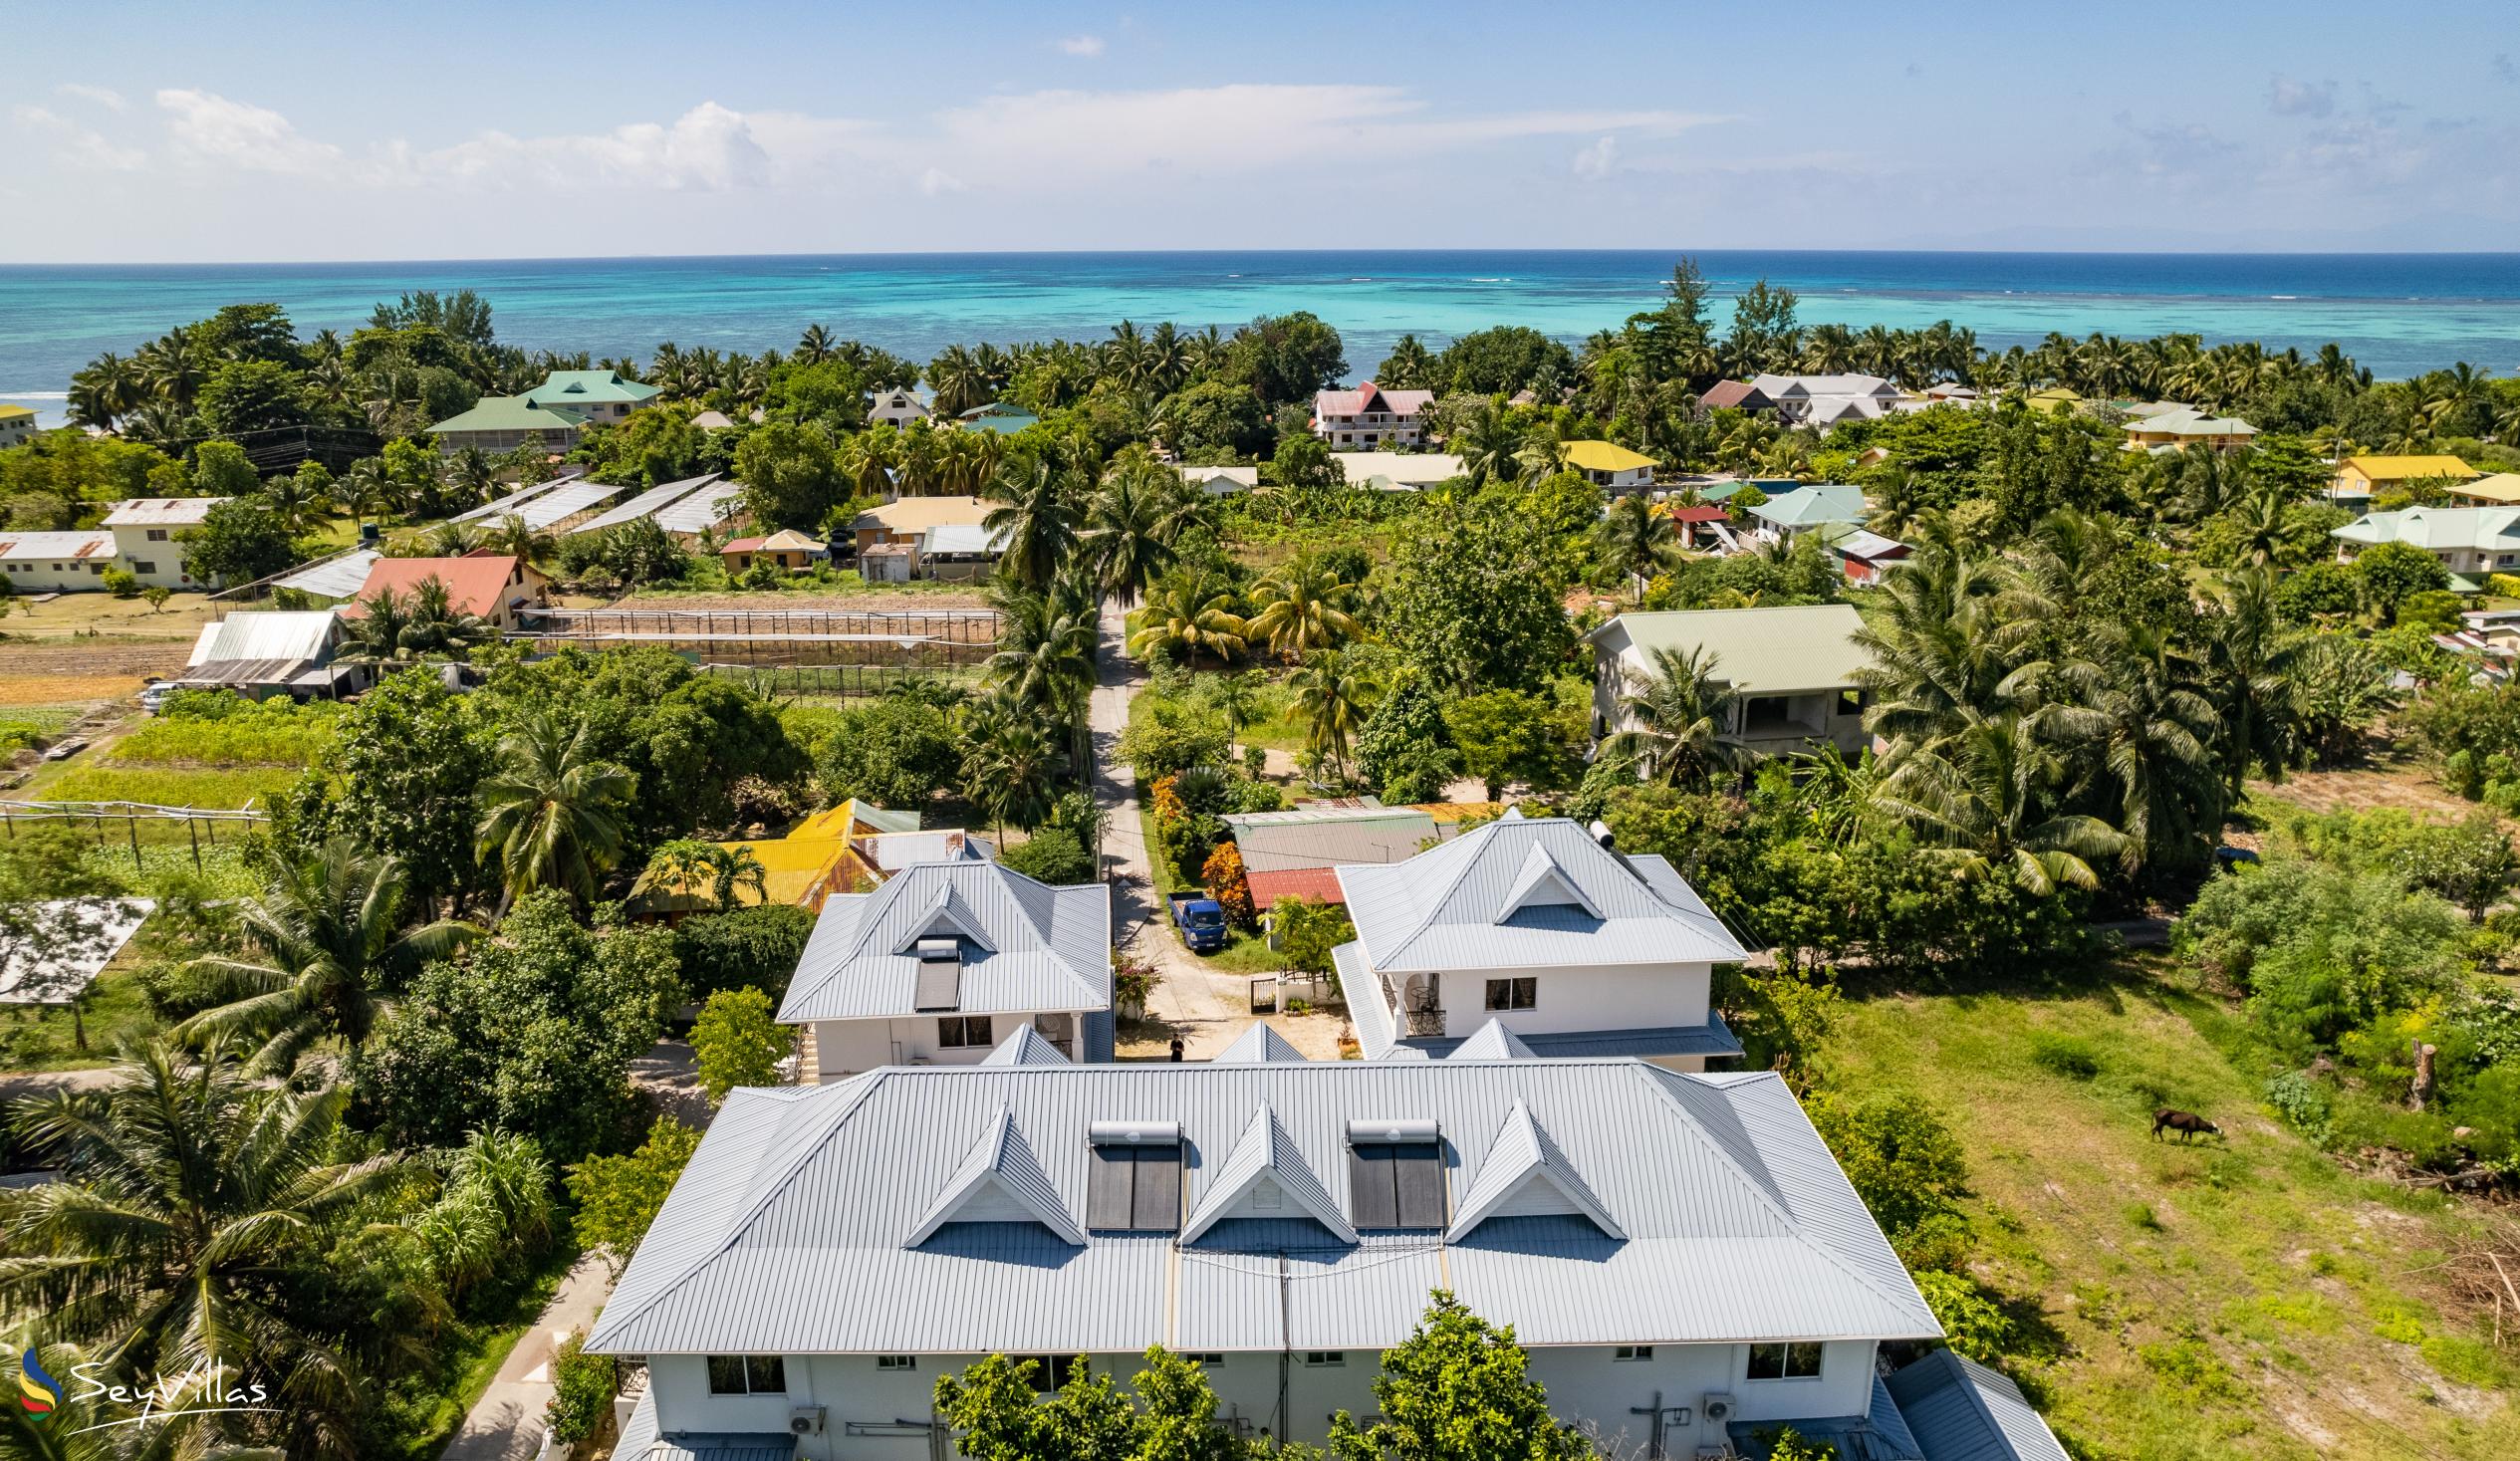 Photo 1: Casadani Luxury Guest House - Outdoor area - Praslin (Seychelles)